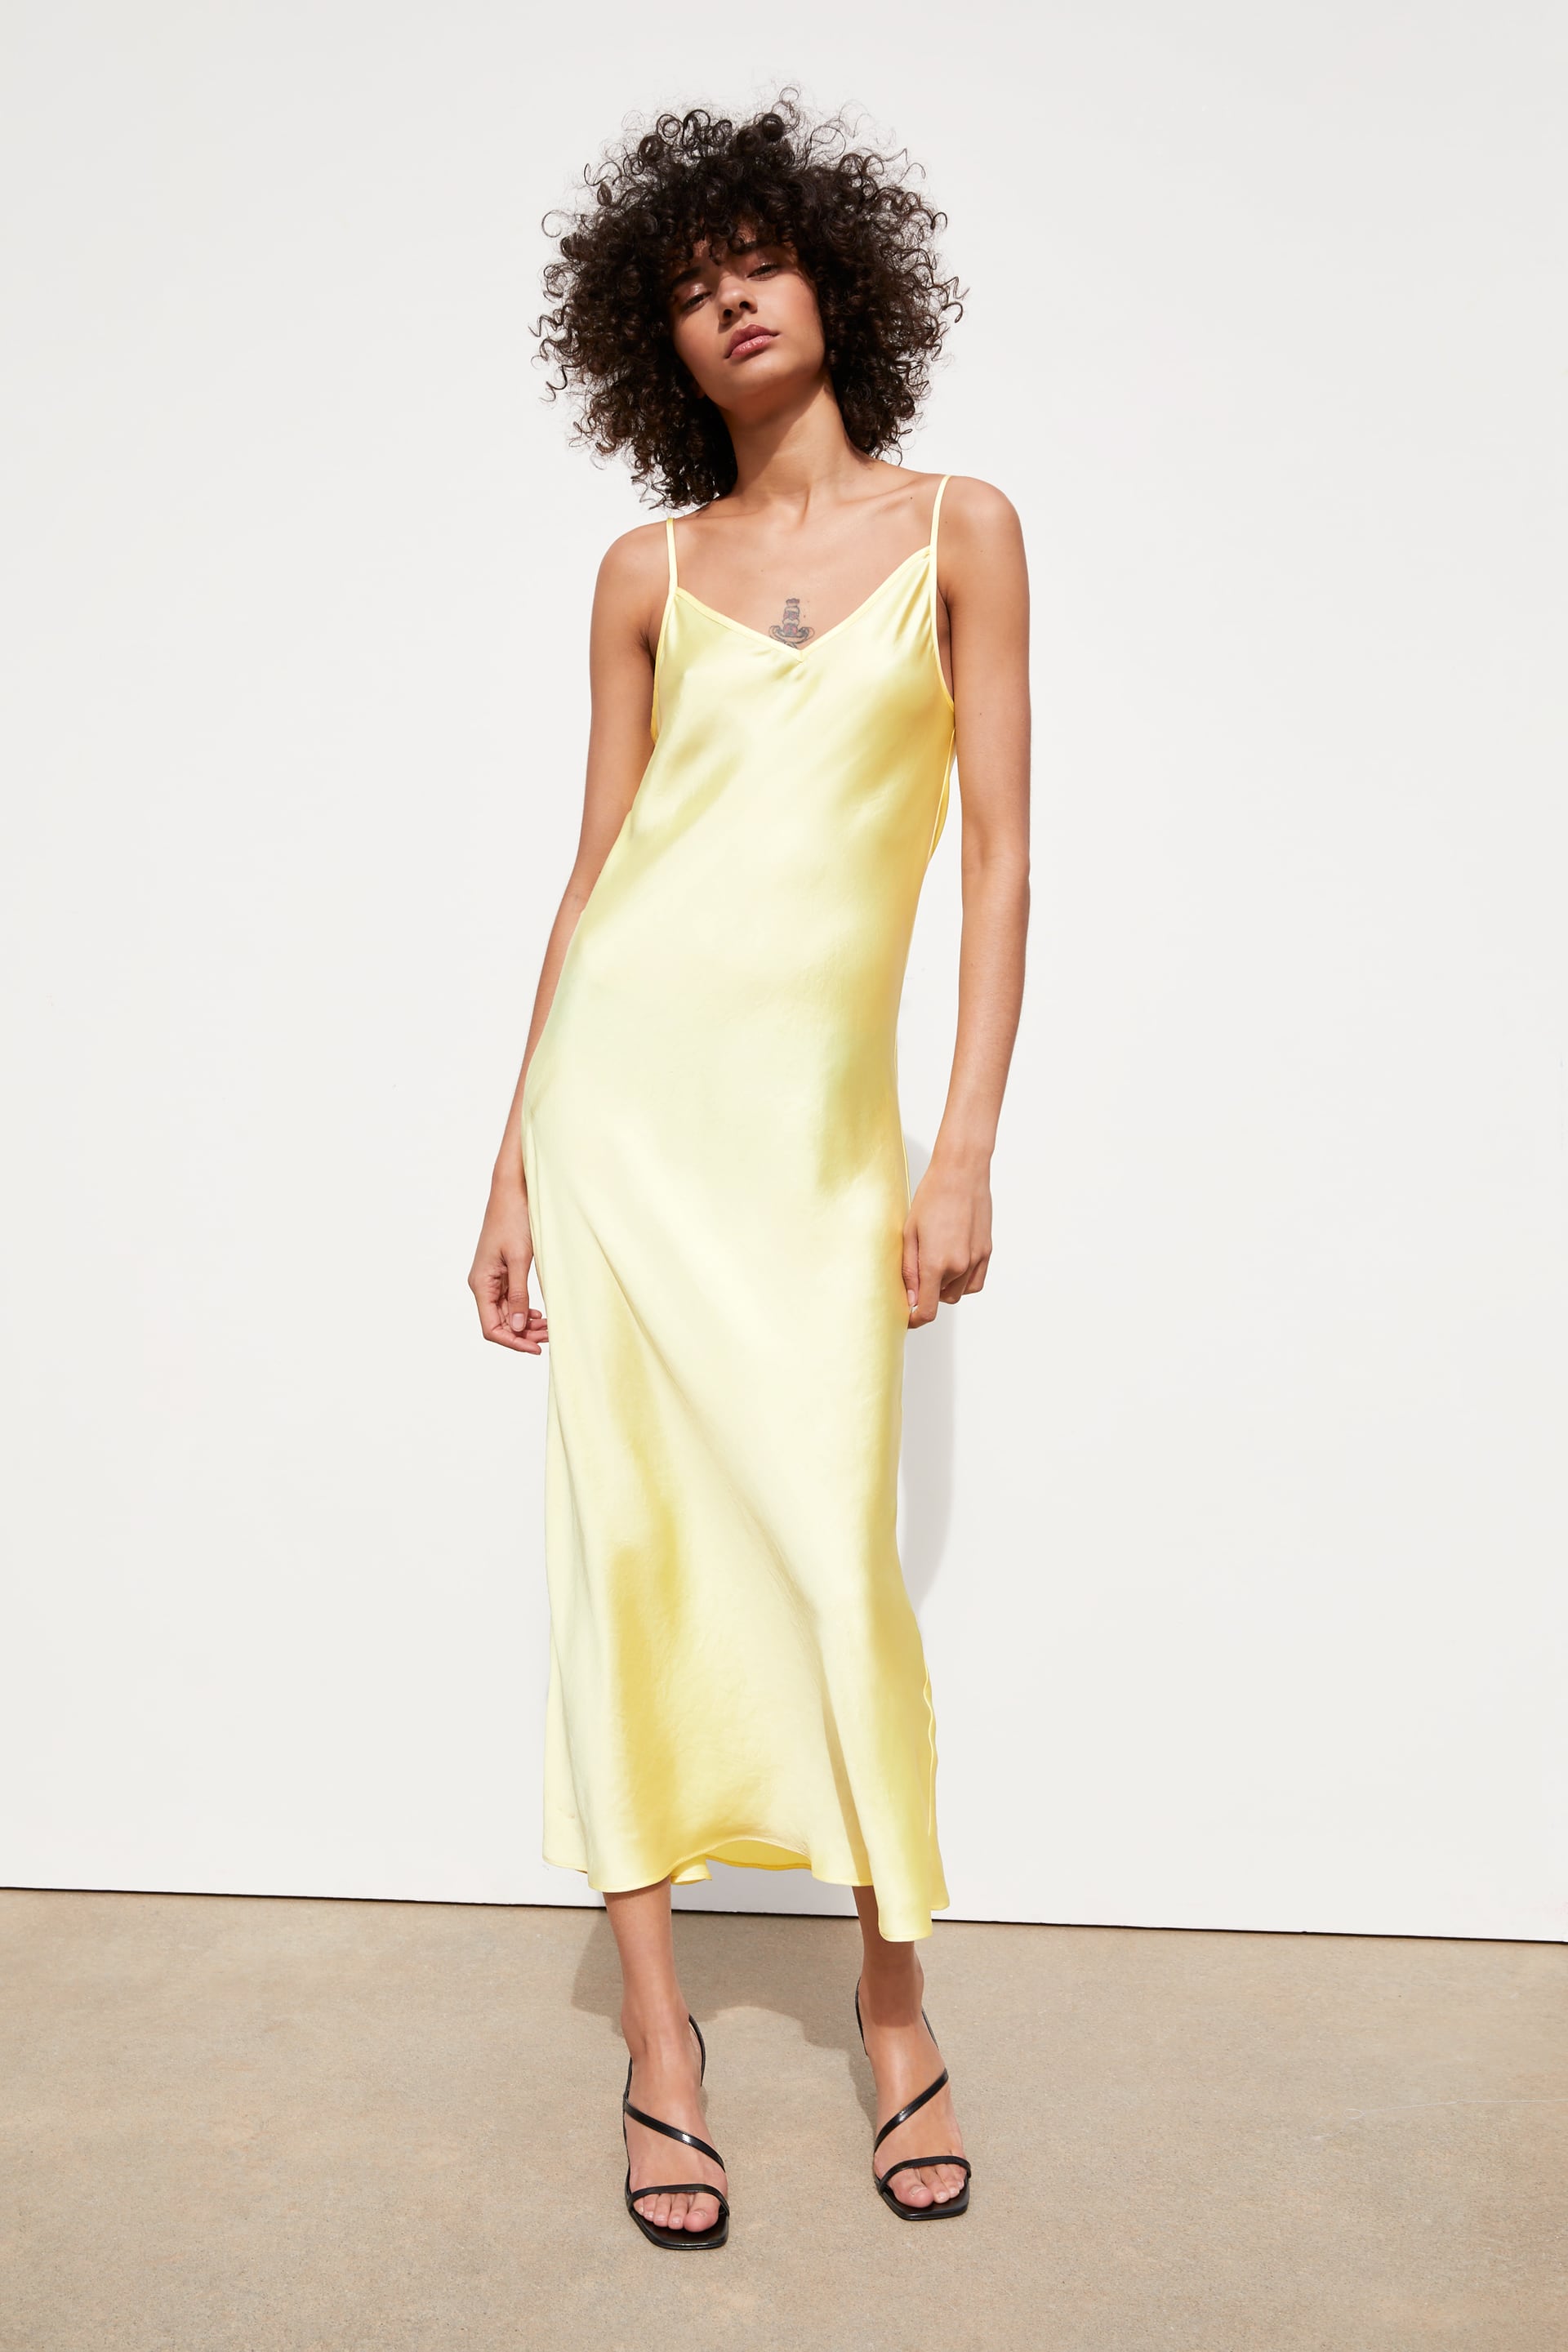 zara yellow dress 2019